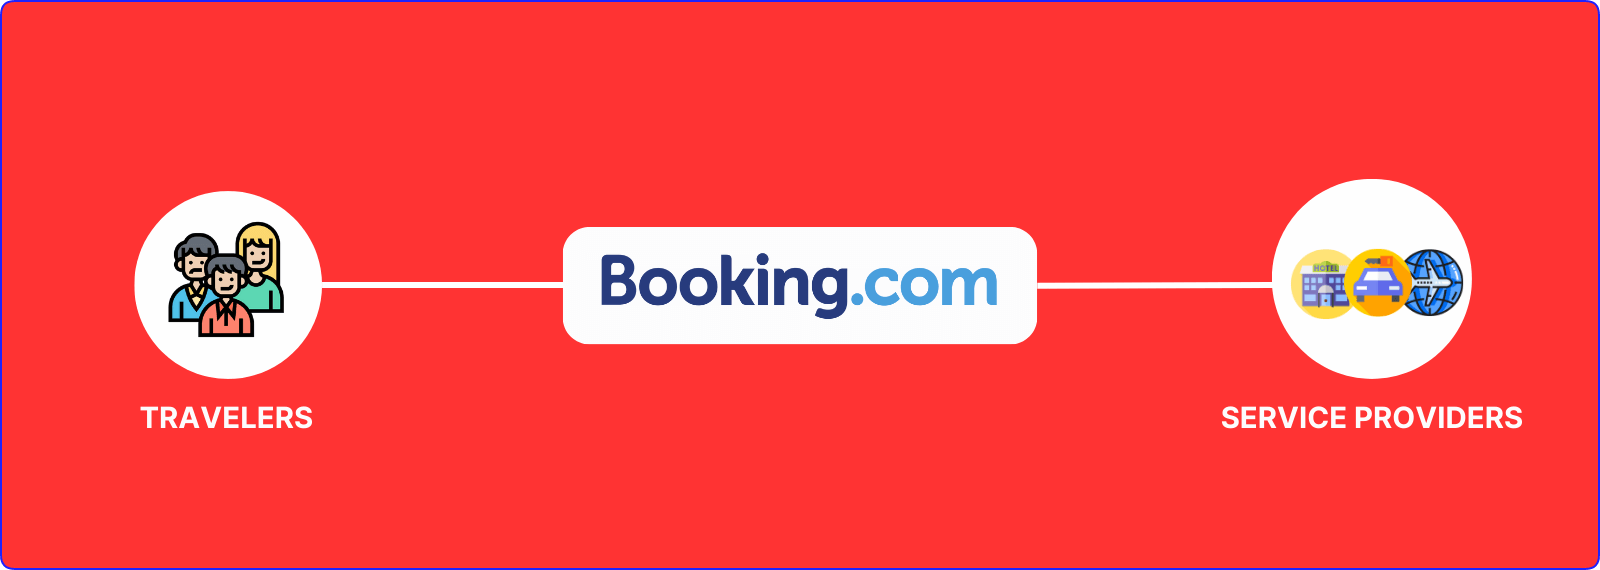 how Booking.com works